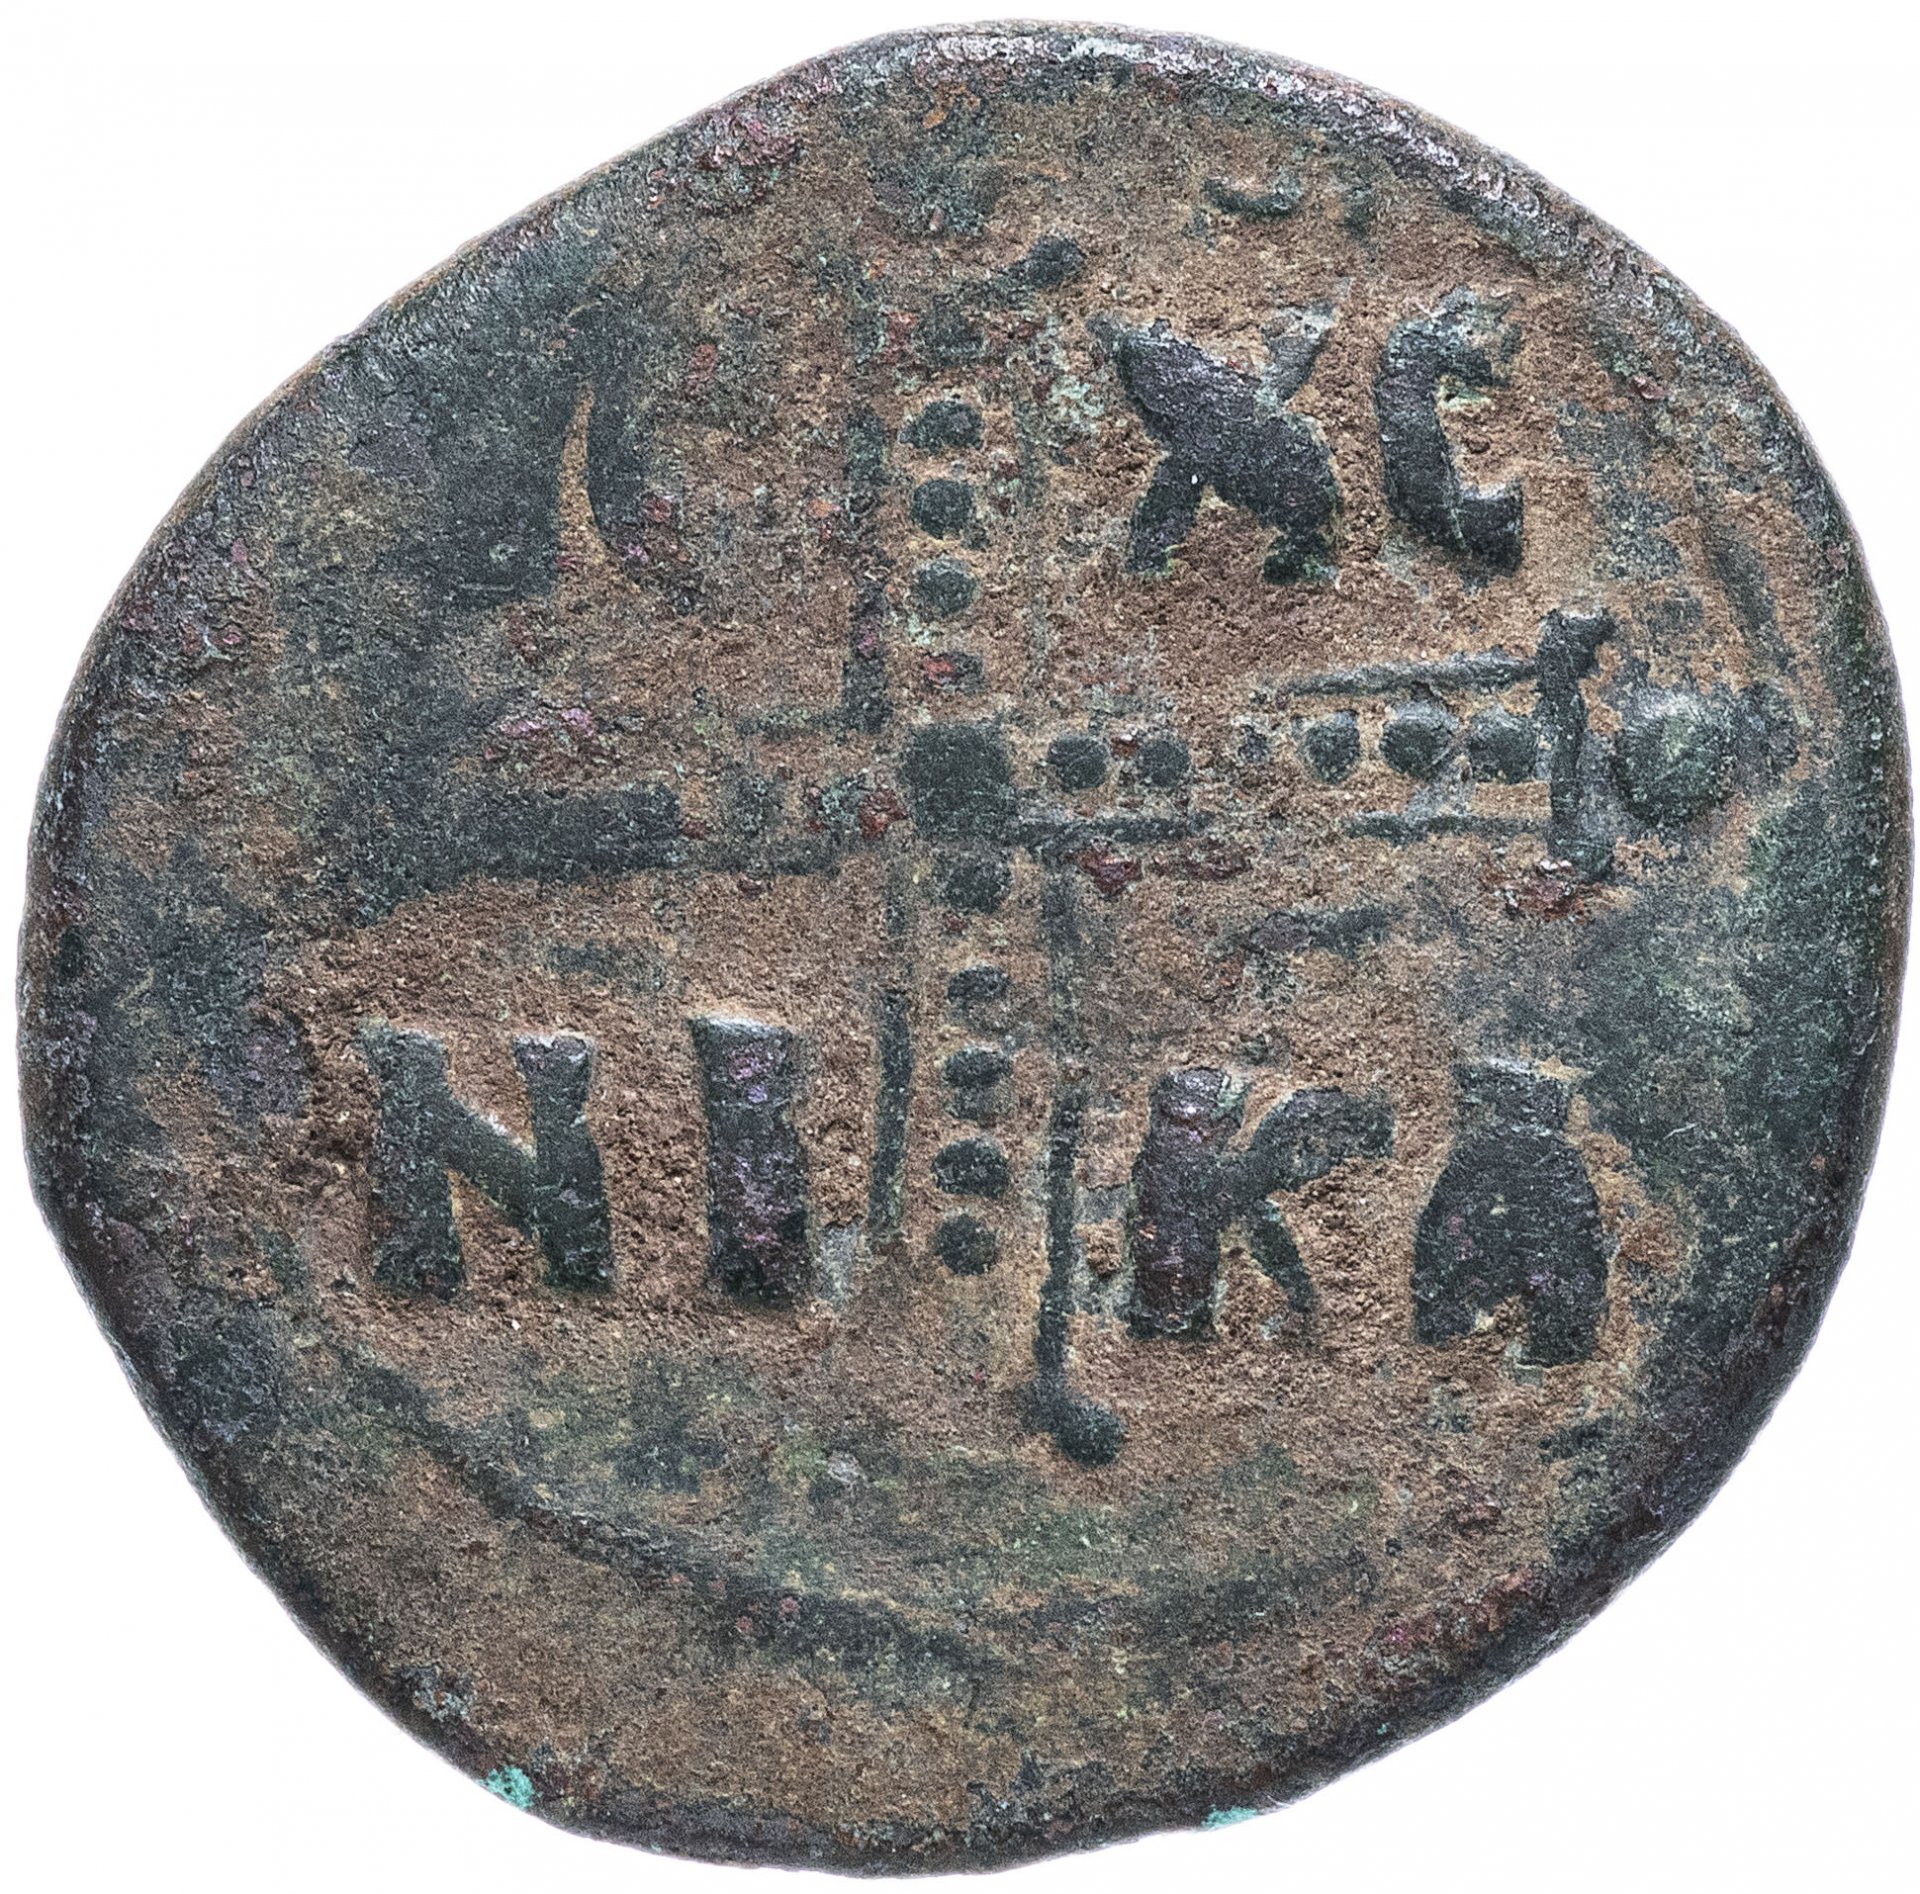 Бронзовая монета византии. Монета Византия фоллис 1034-1041. Византийские монеты Палеолог.